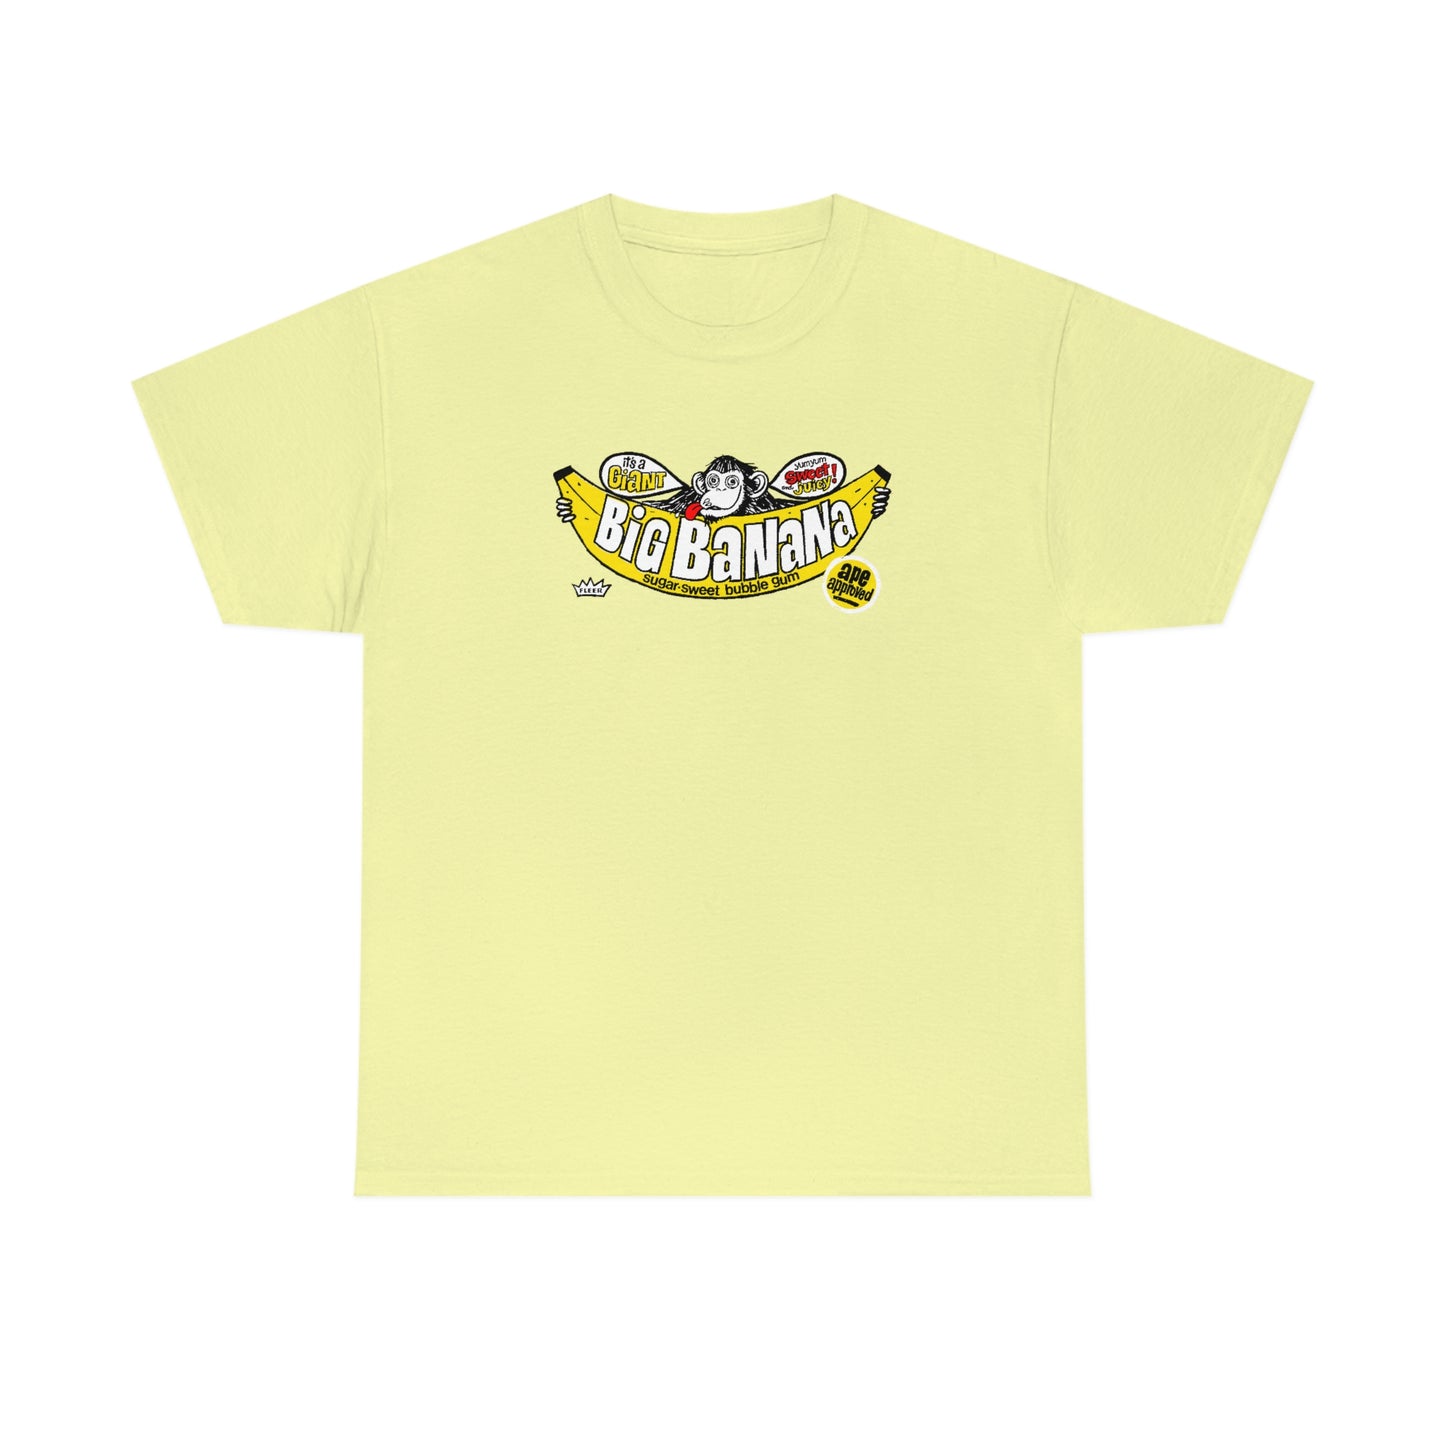 Big Banana Gum T-Shirt